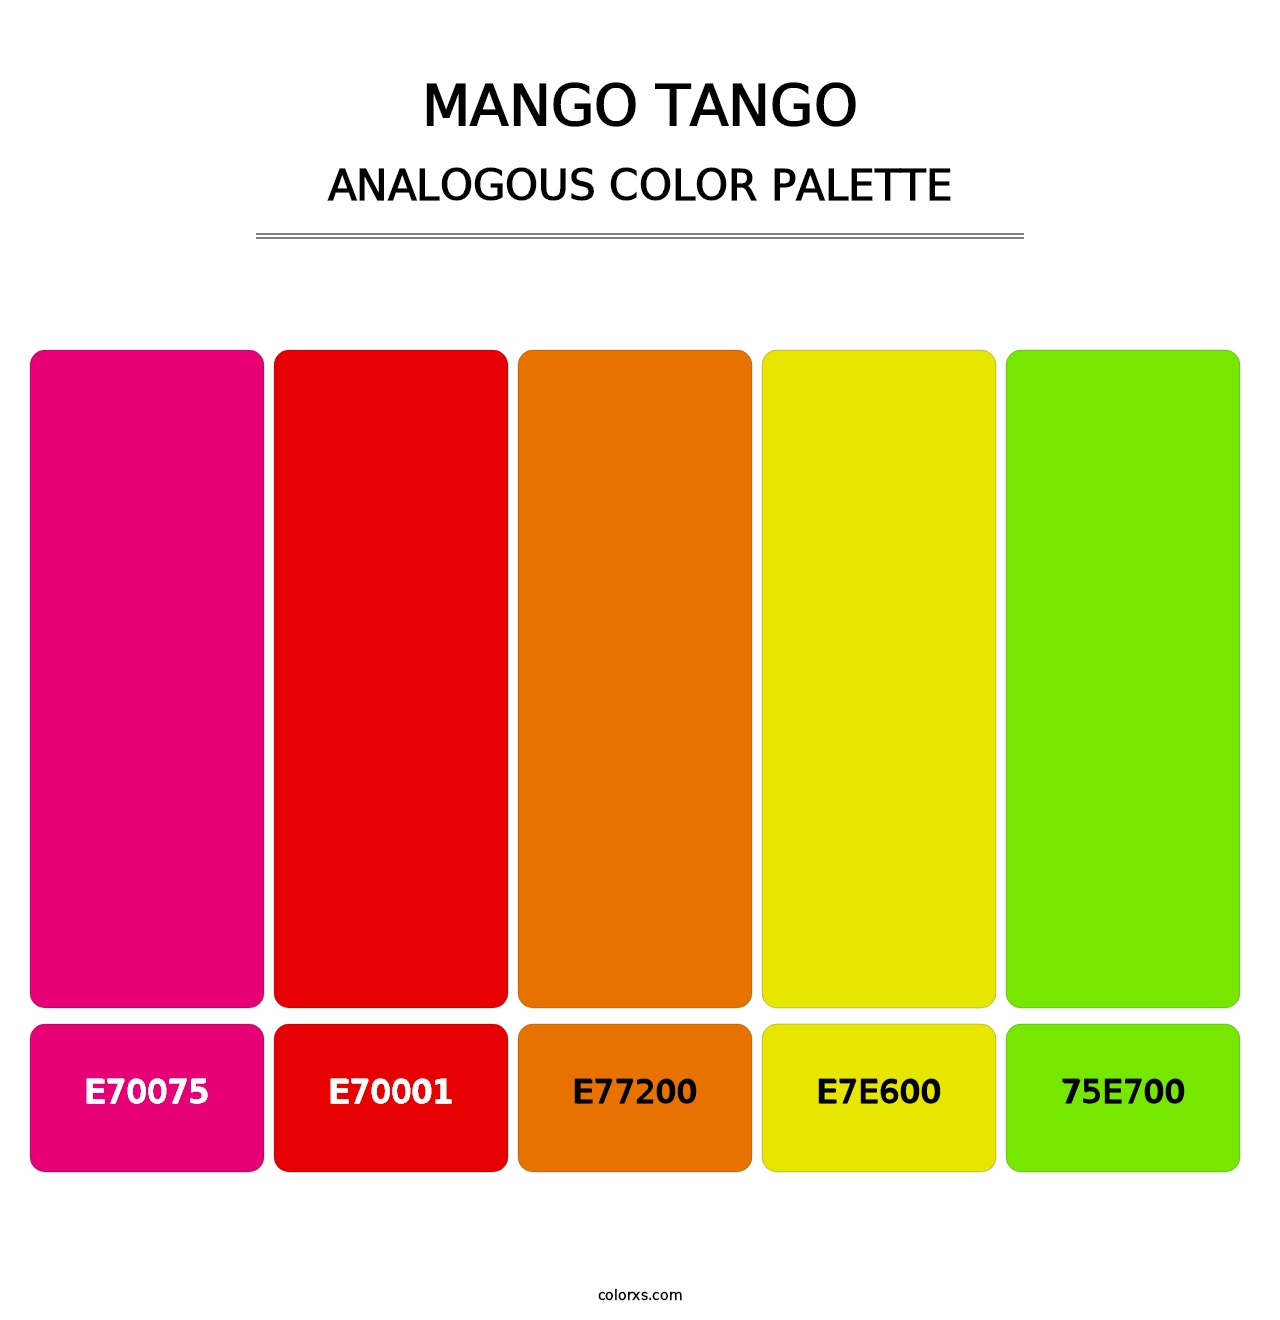 Mango Tango - Analogous Color Palette